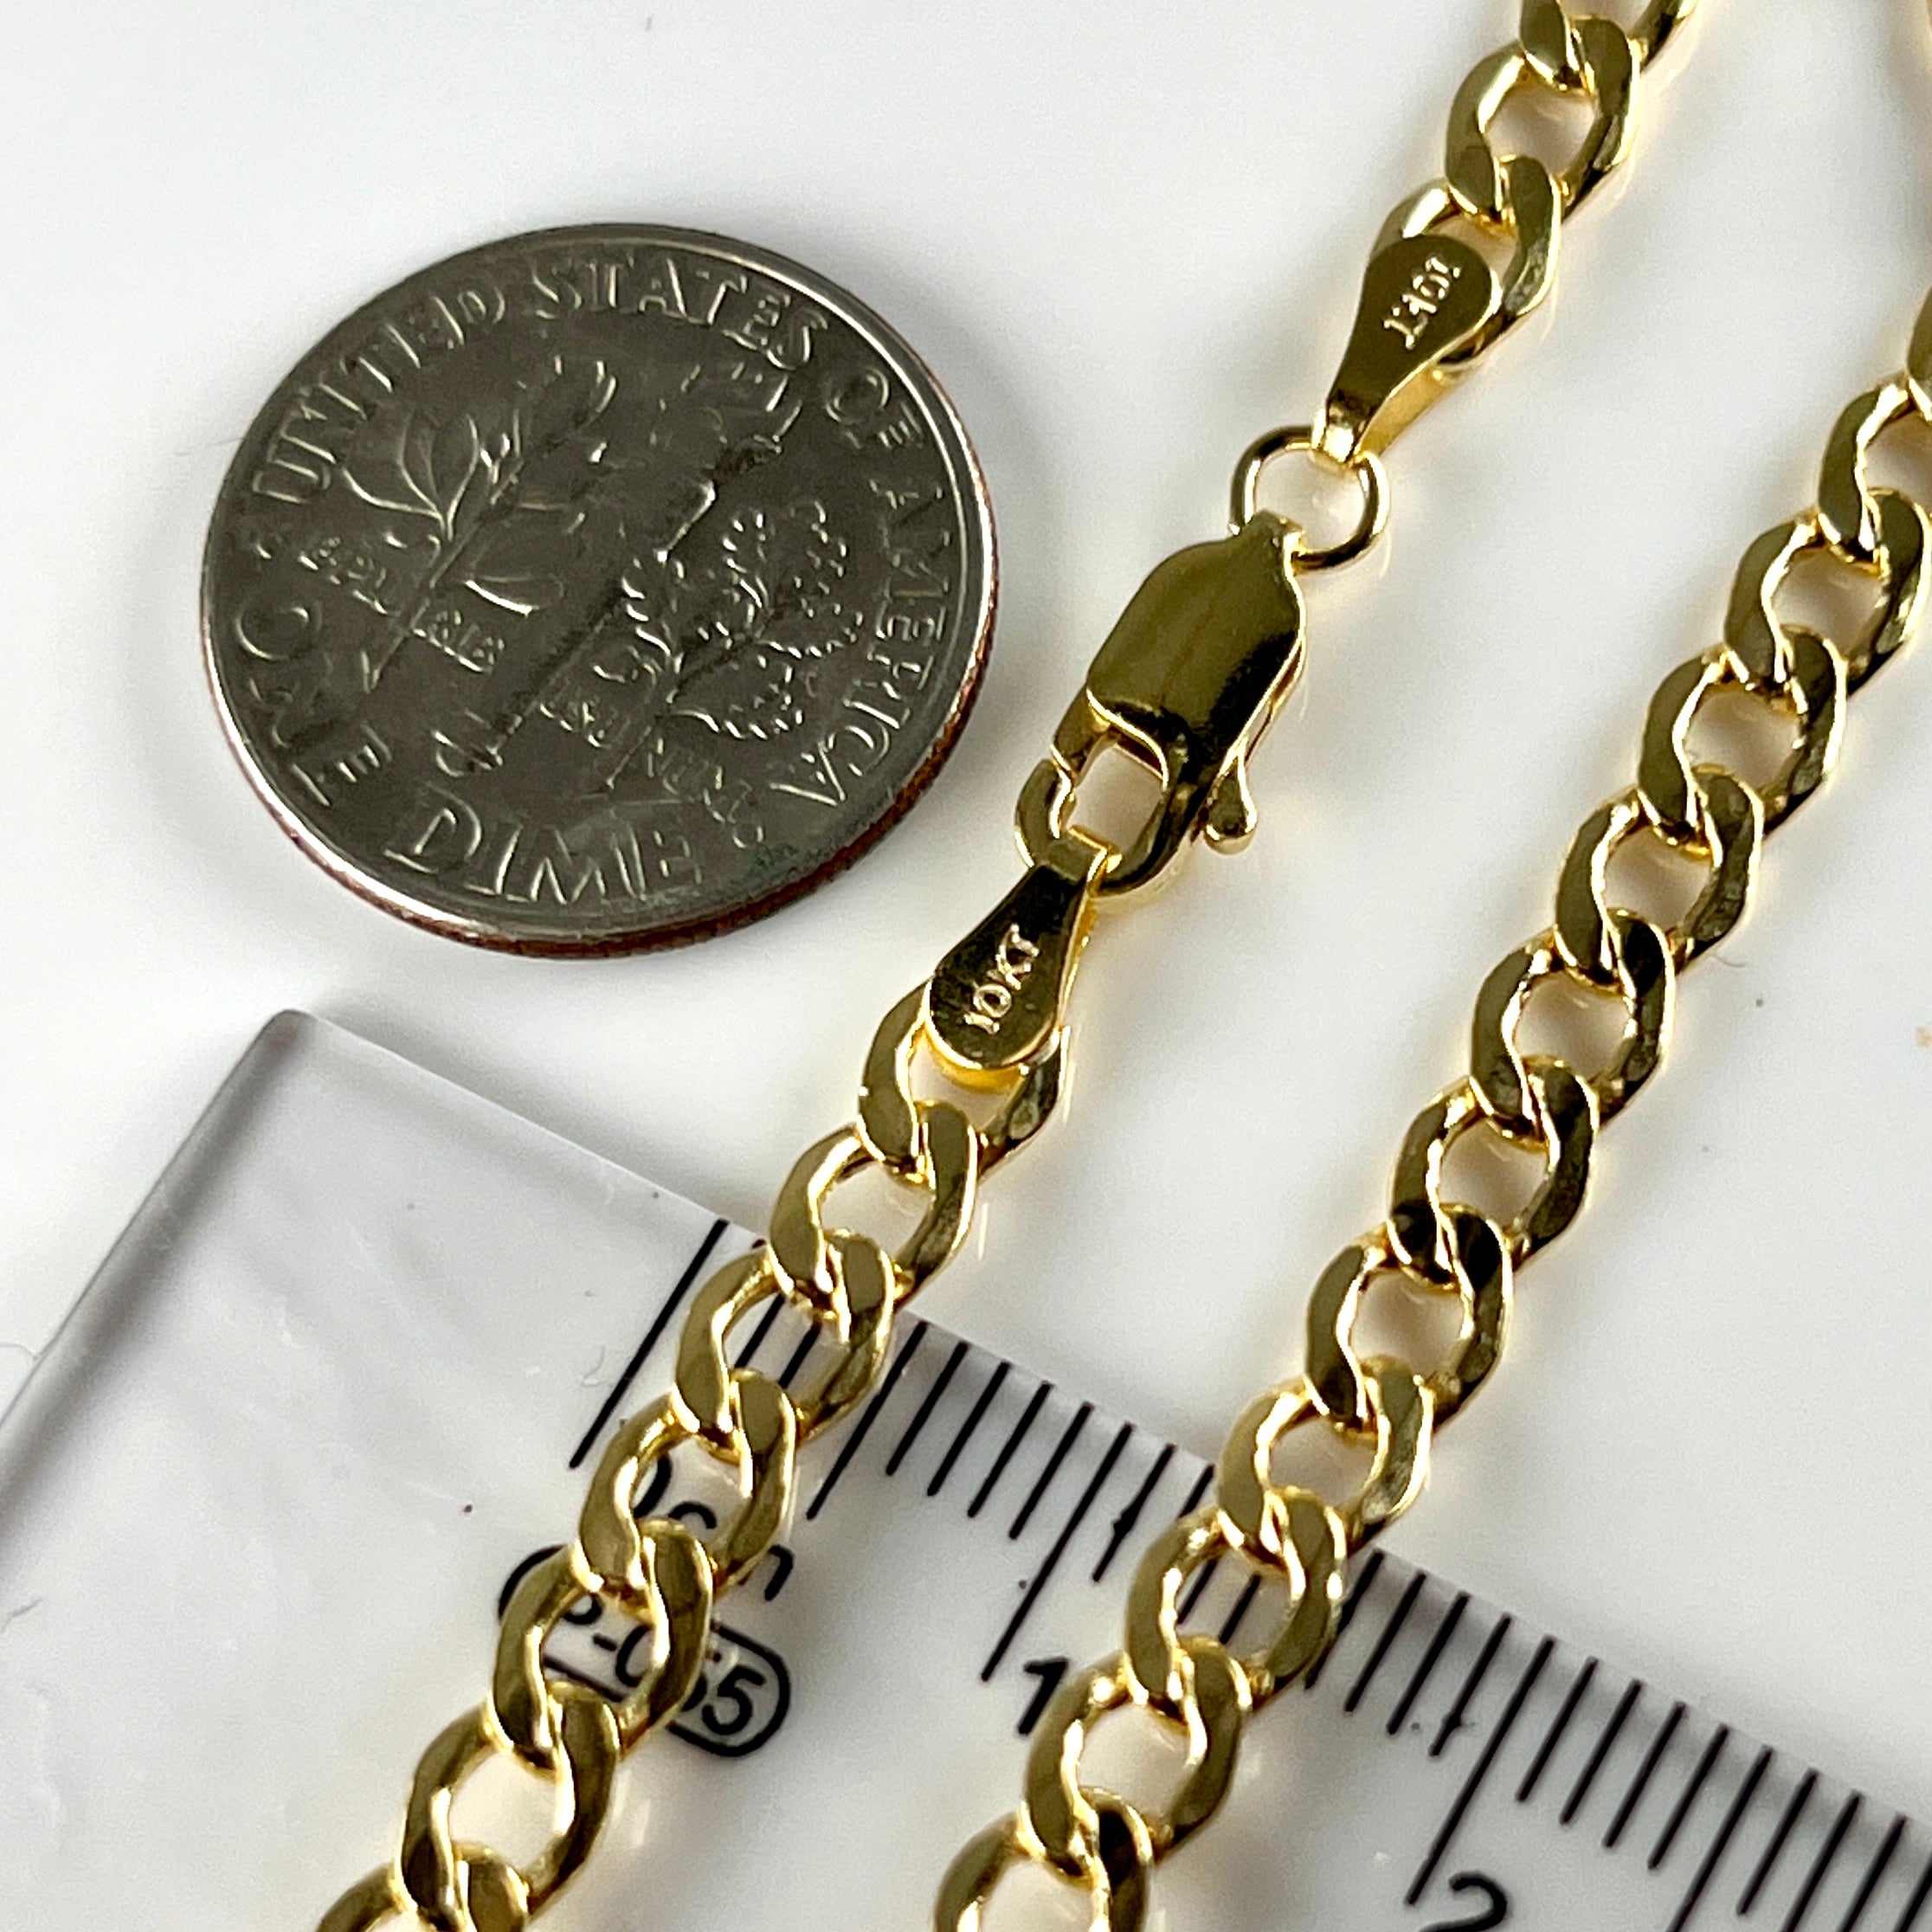 10K Yellow Gold 4.3mm Curb Link 8” Bracelet